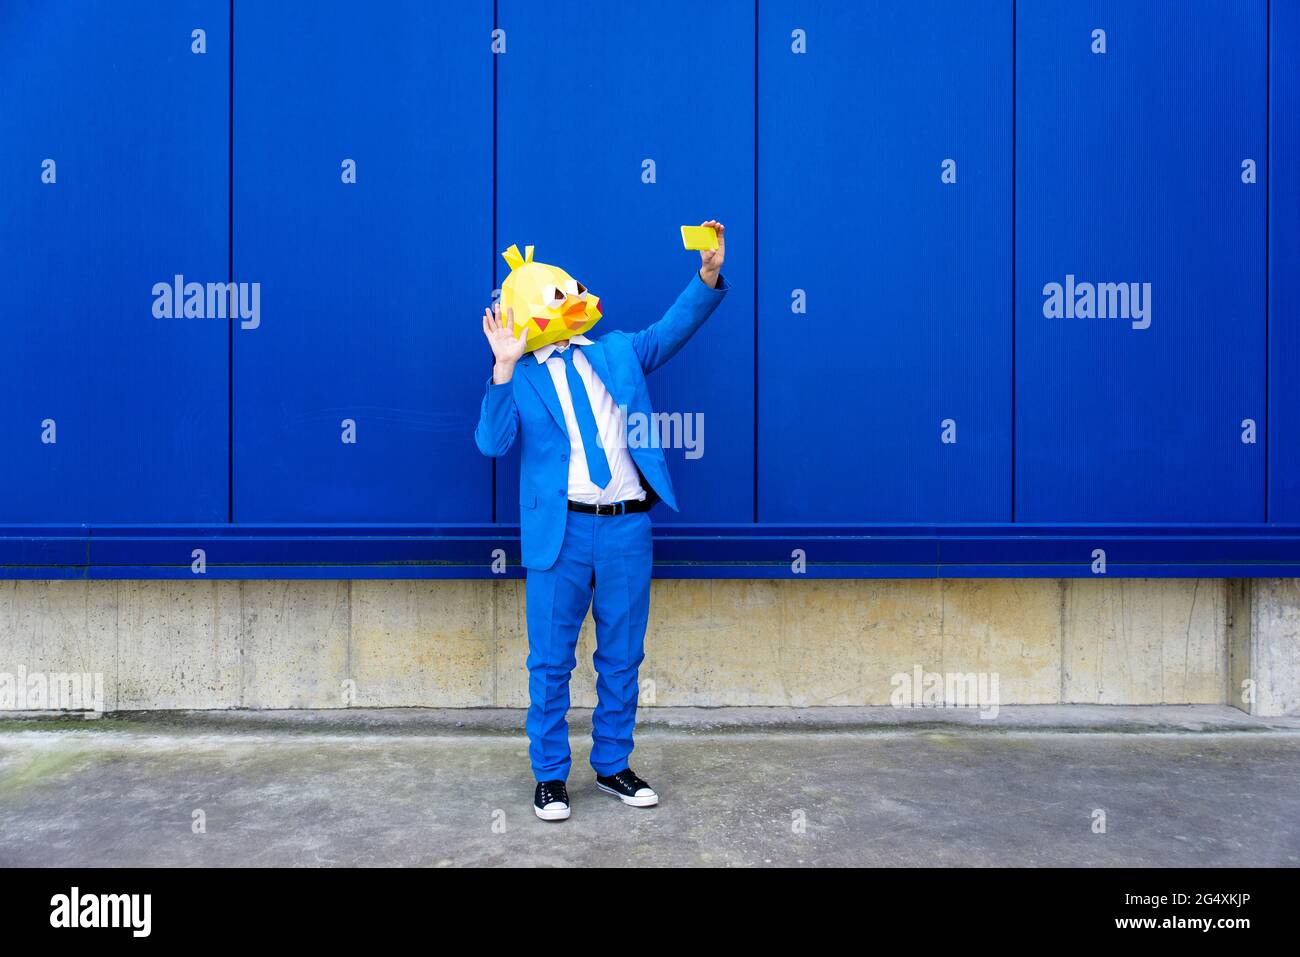 Uomo che indossa una vivace tuta blu e una maschera per uccelli che porta selfie smartphone davanti alla parete blu Foto Stock